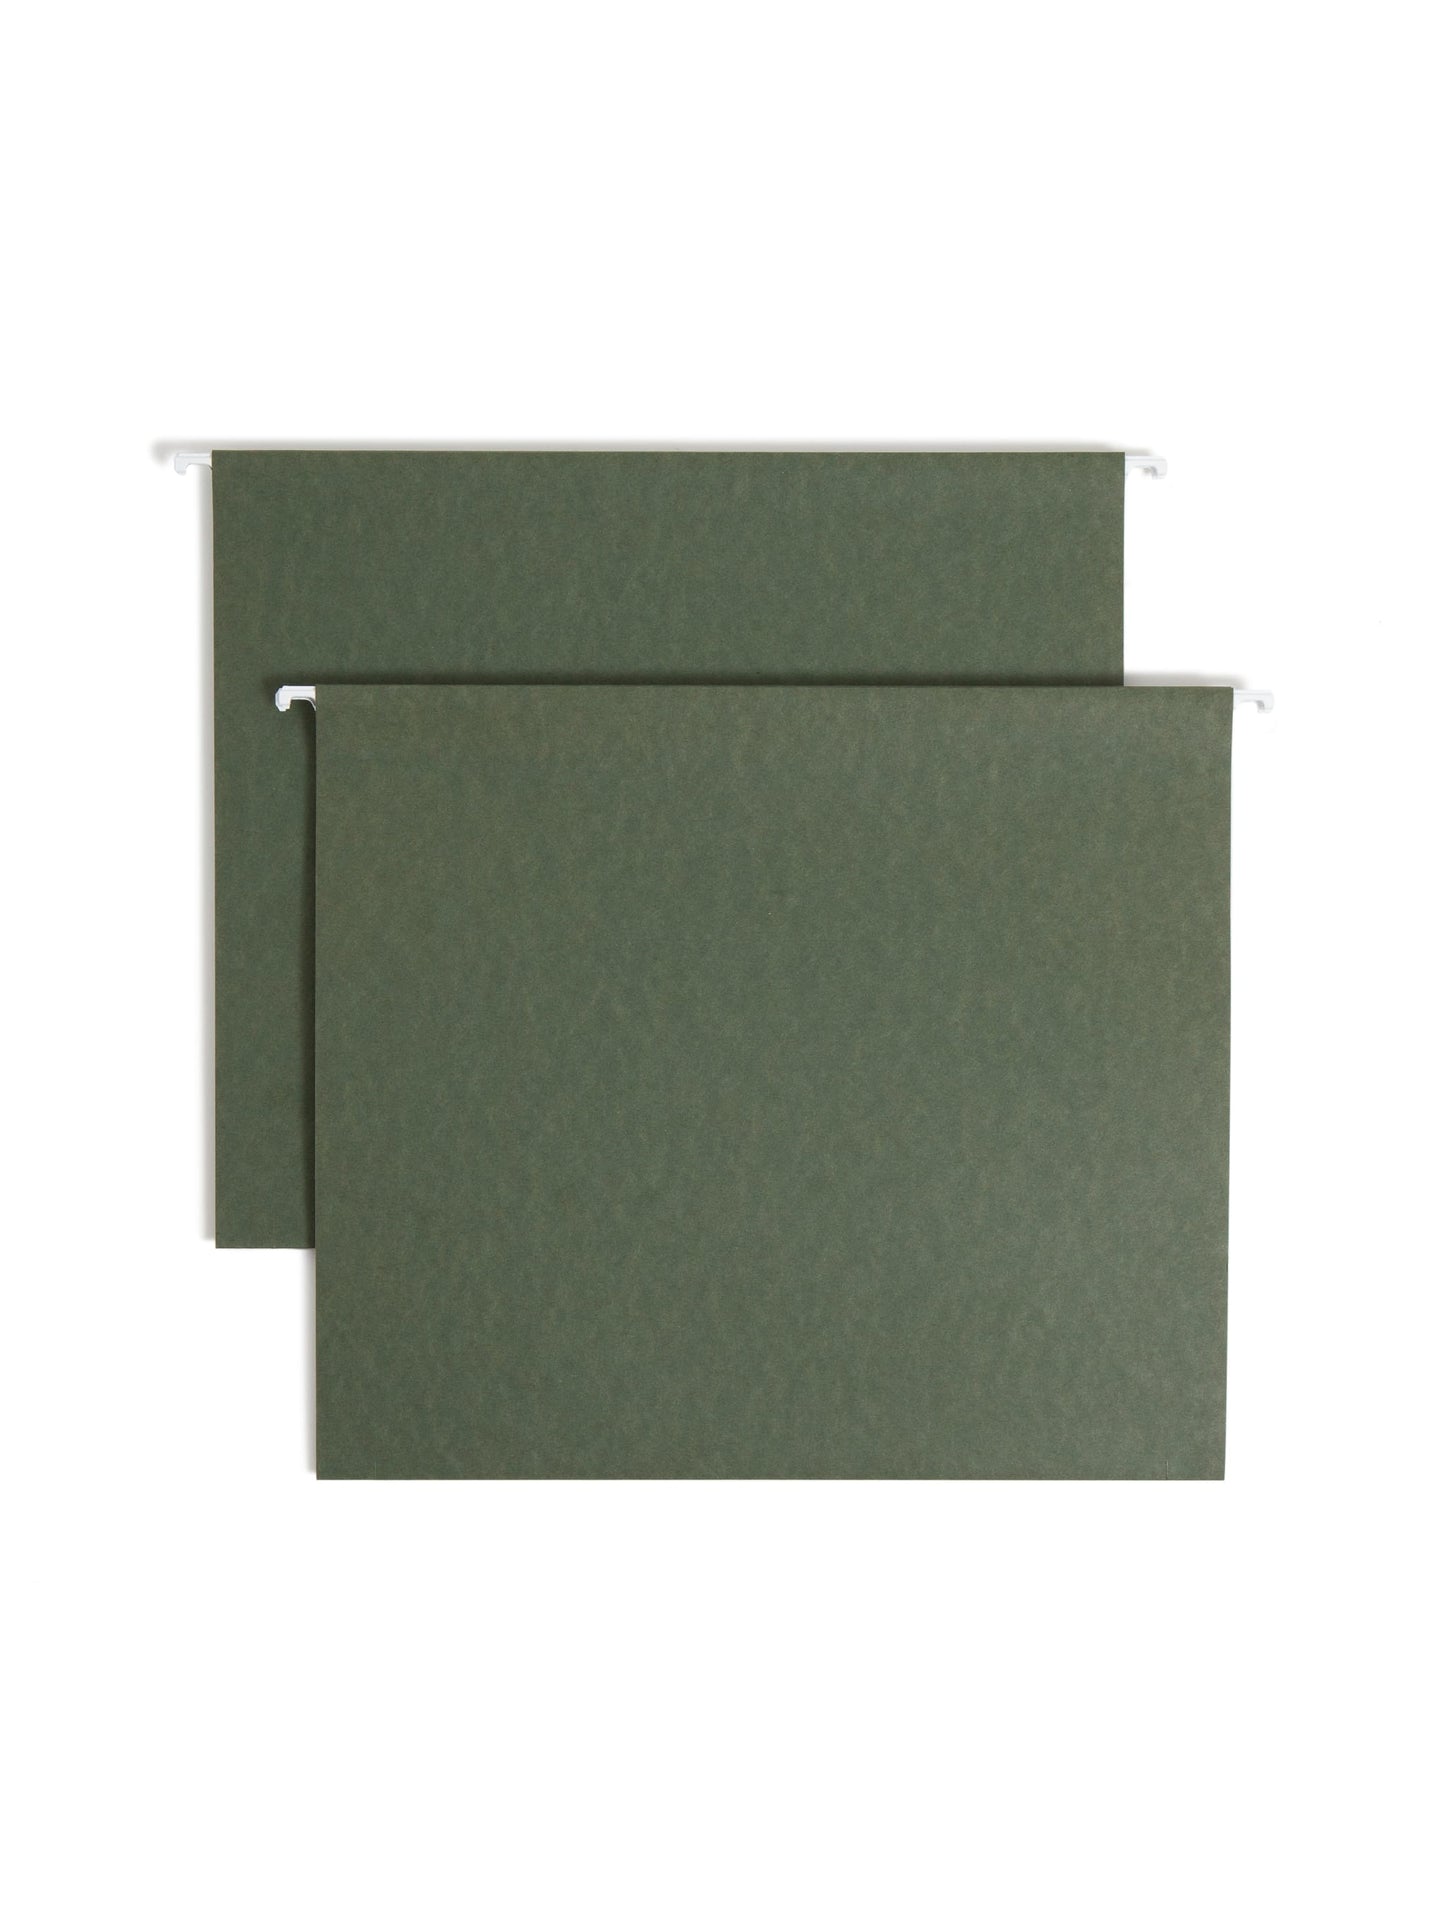 Hanging Box Bottom File Folders, 2 inch Expansion, Standard Green Color, Letter Size, Set of 25, 086486642590